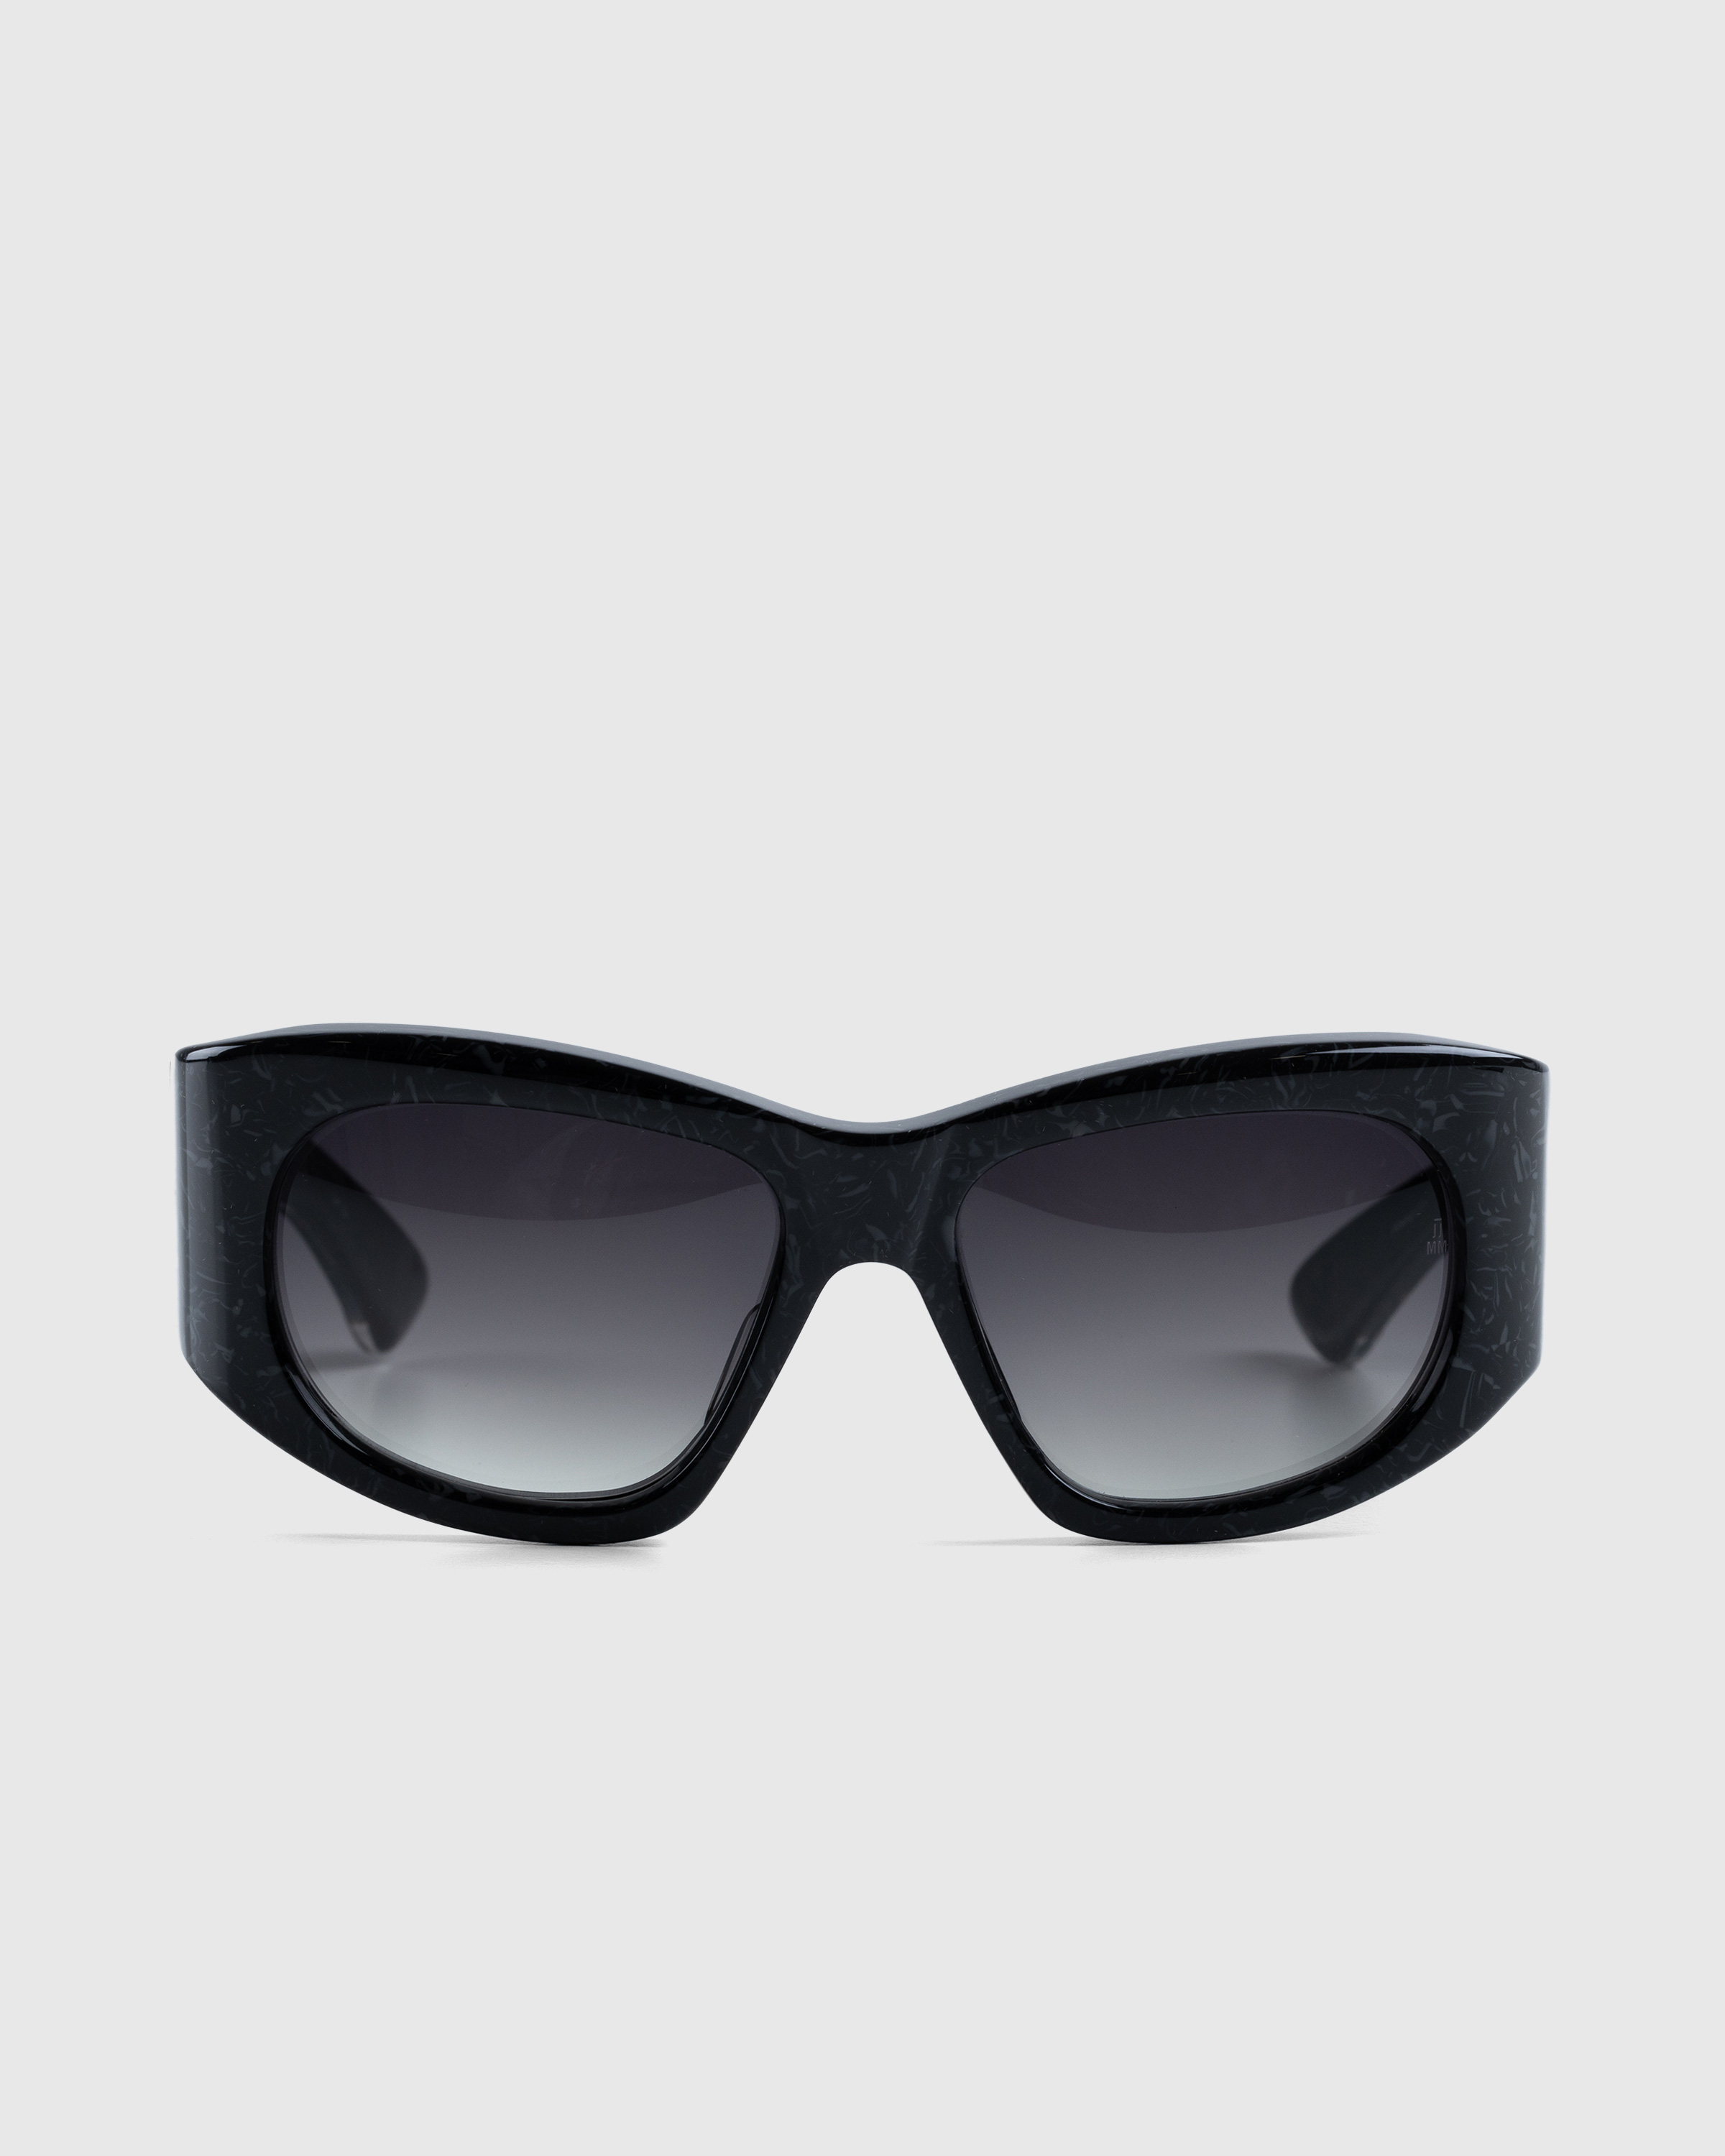 Jacques Marie Mage – Nadja Slate - Sunglasses - Black - Image 1